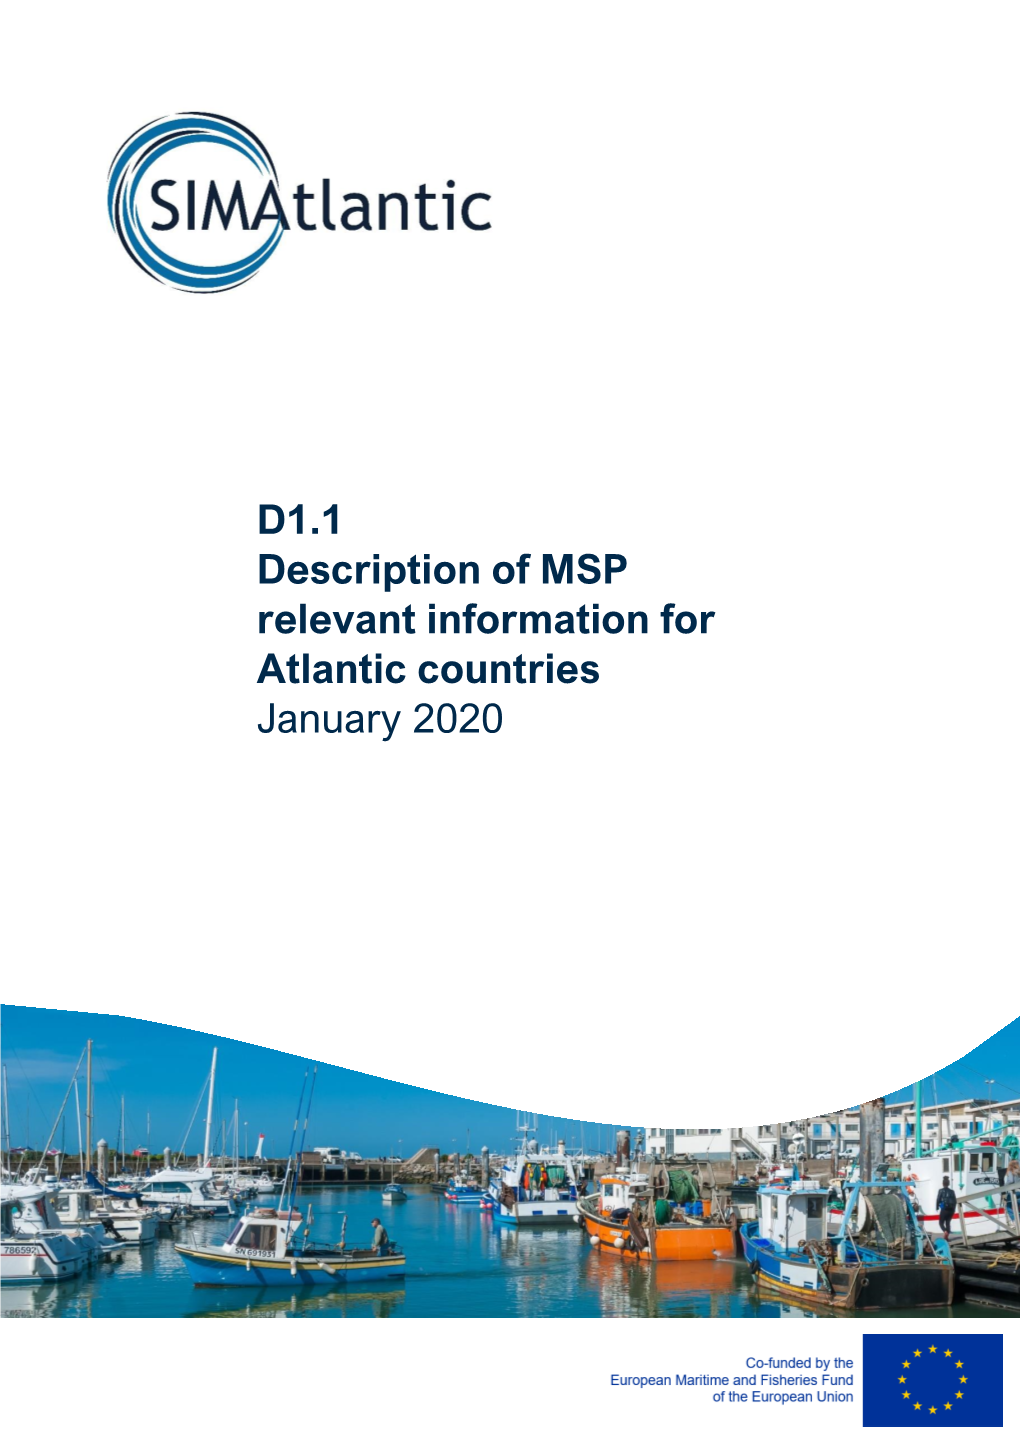 D1.1 Description of MSP Relevant Information for Atlantic